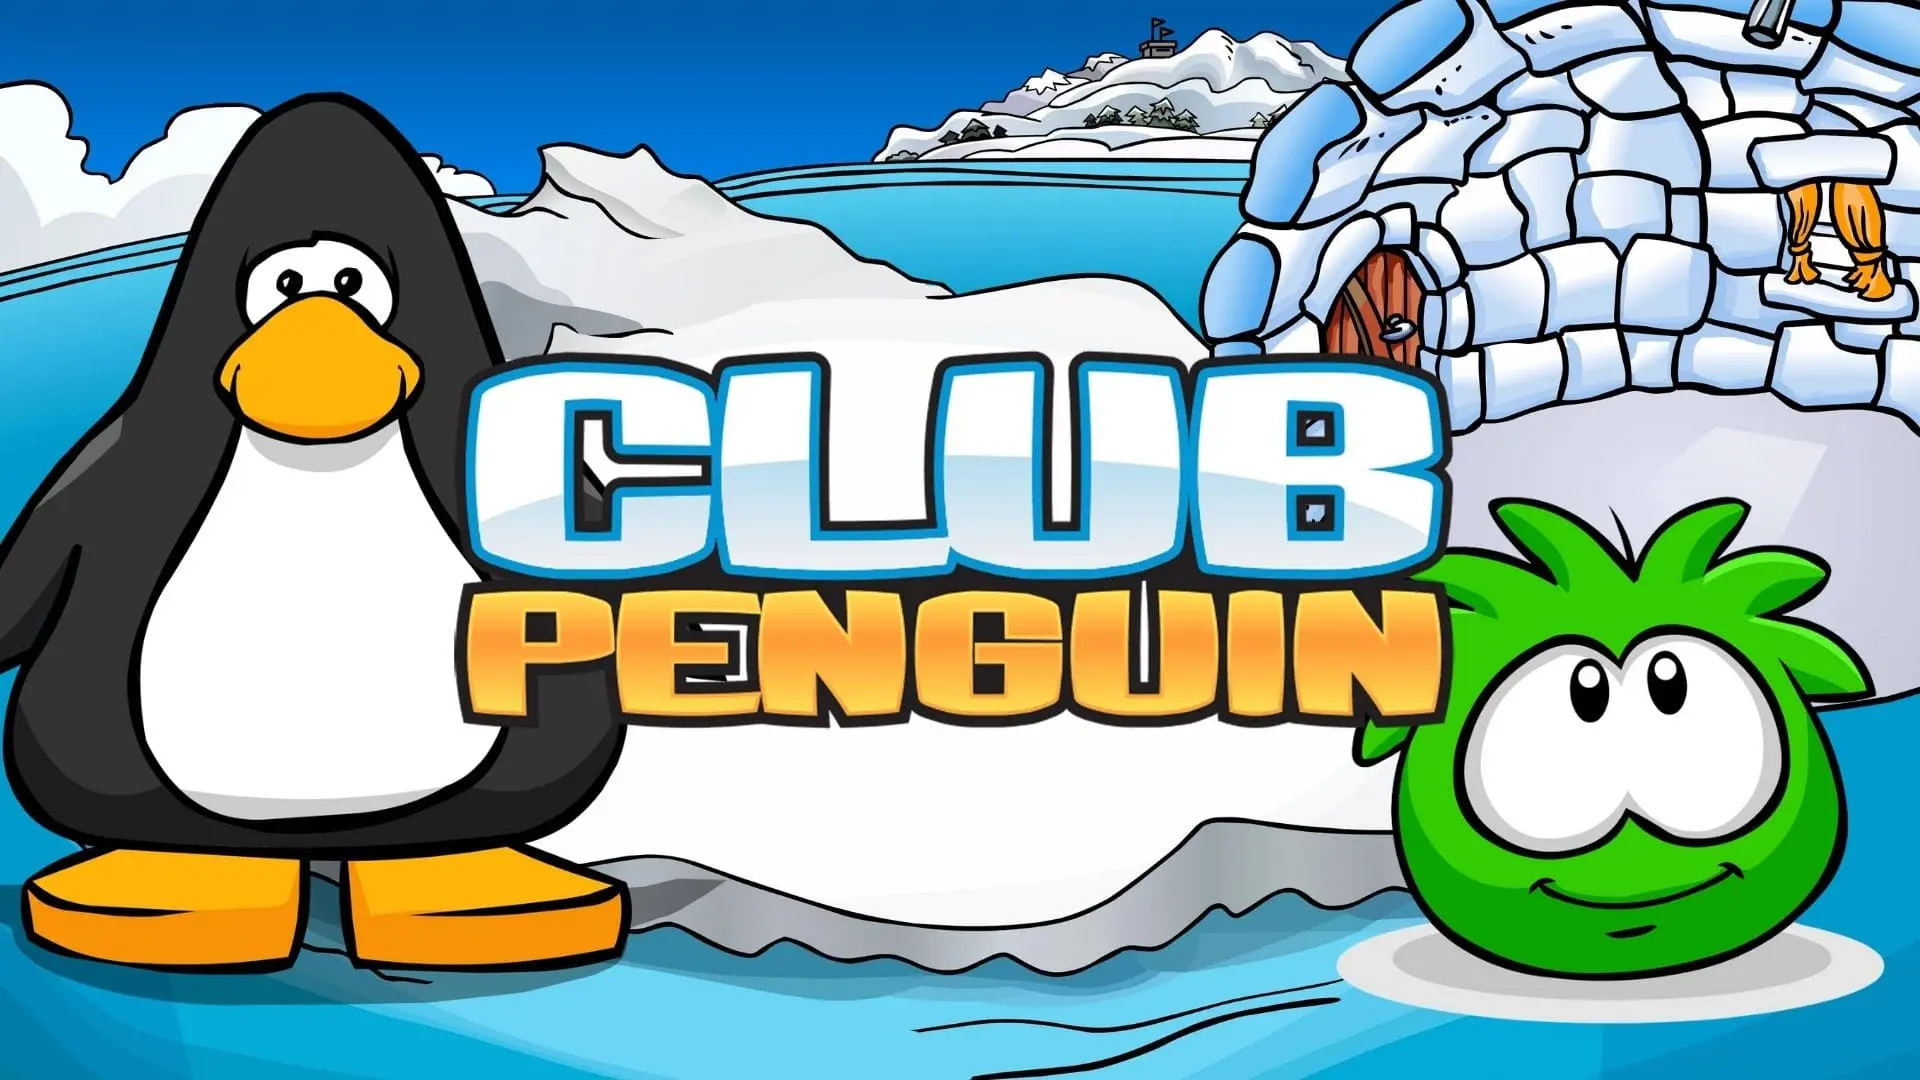 Club Penguin Legacy RETURNS After Disney Shutdown 